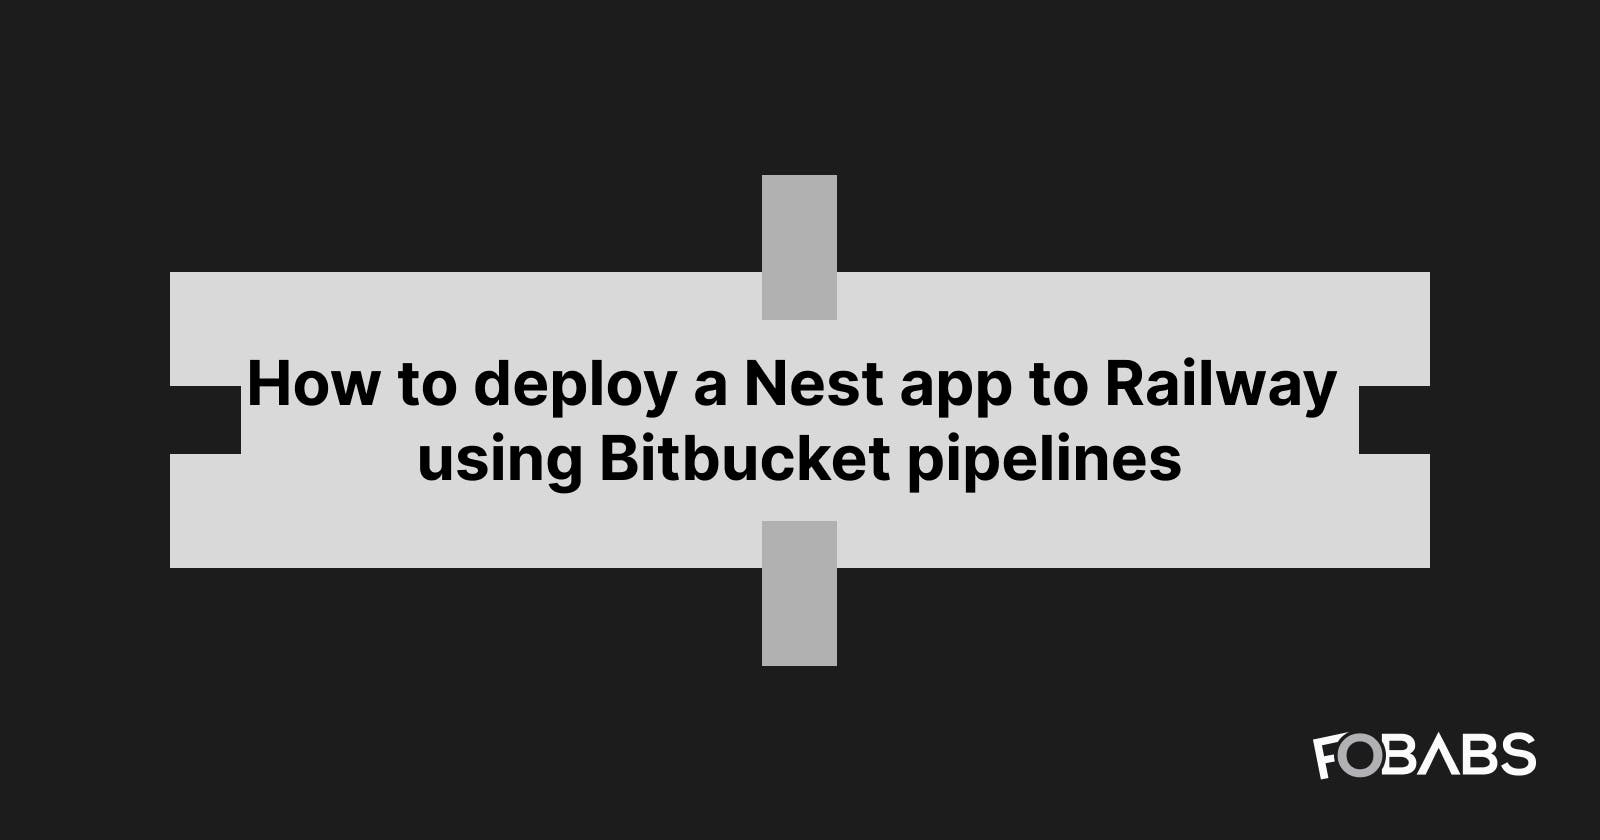 How to deploy a Nest app to Railway using Bitbucket pipelines